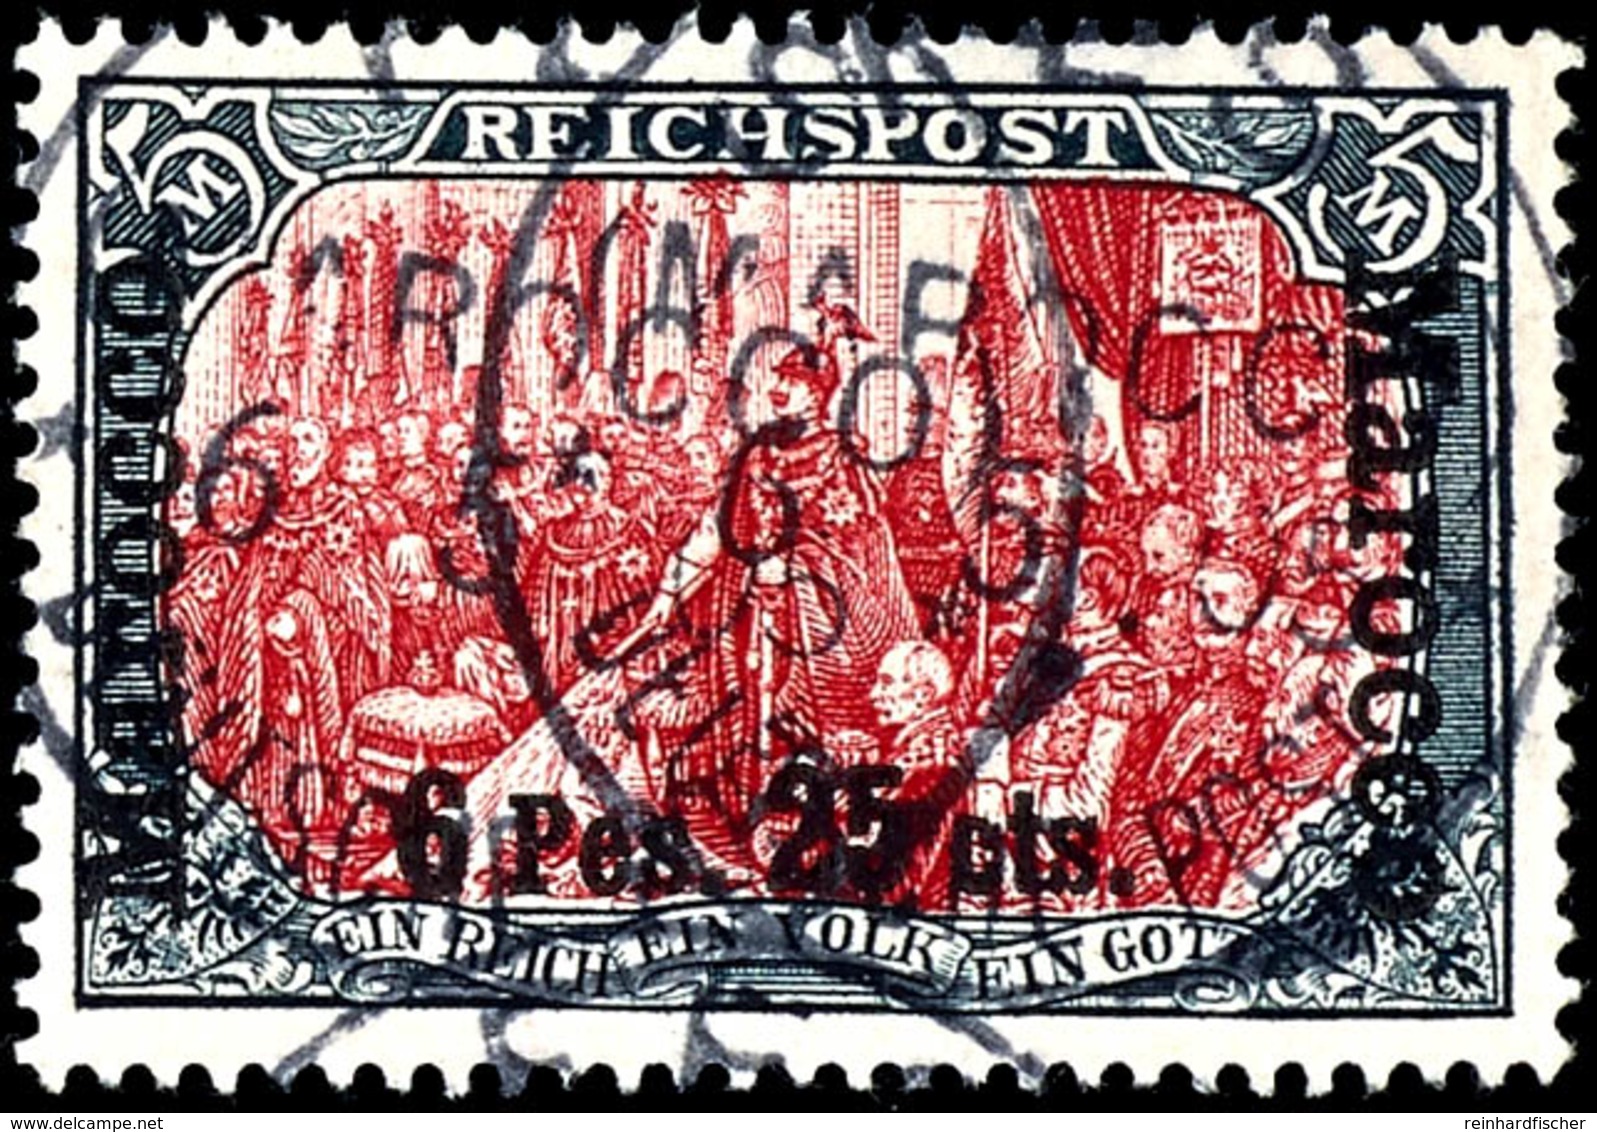 5 Mark Reichspost Mit Aufdruck "Marocco 6 Pes. 25 Cts." In Type II, Tadellose Marke, Gestempelt "FES", Michel  340,-, Ka - Maroc (bureaux)